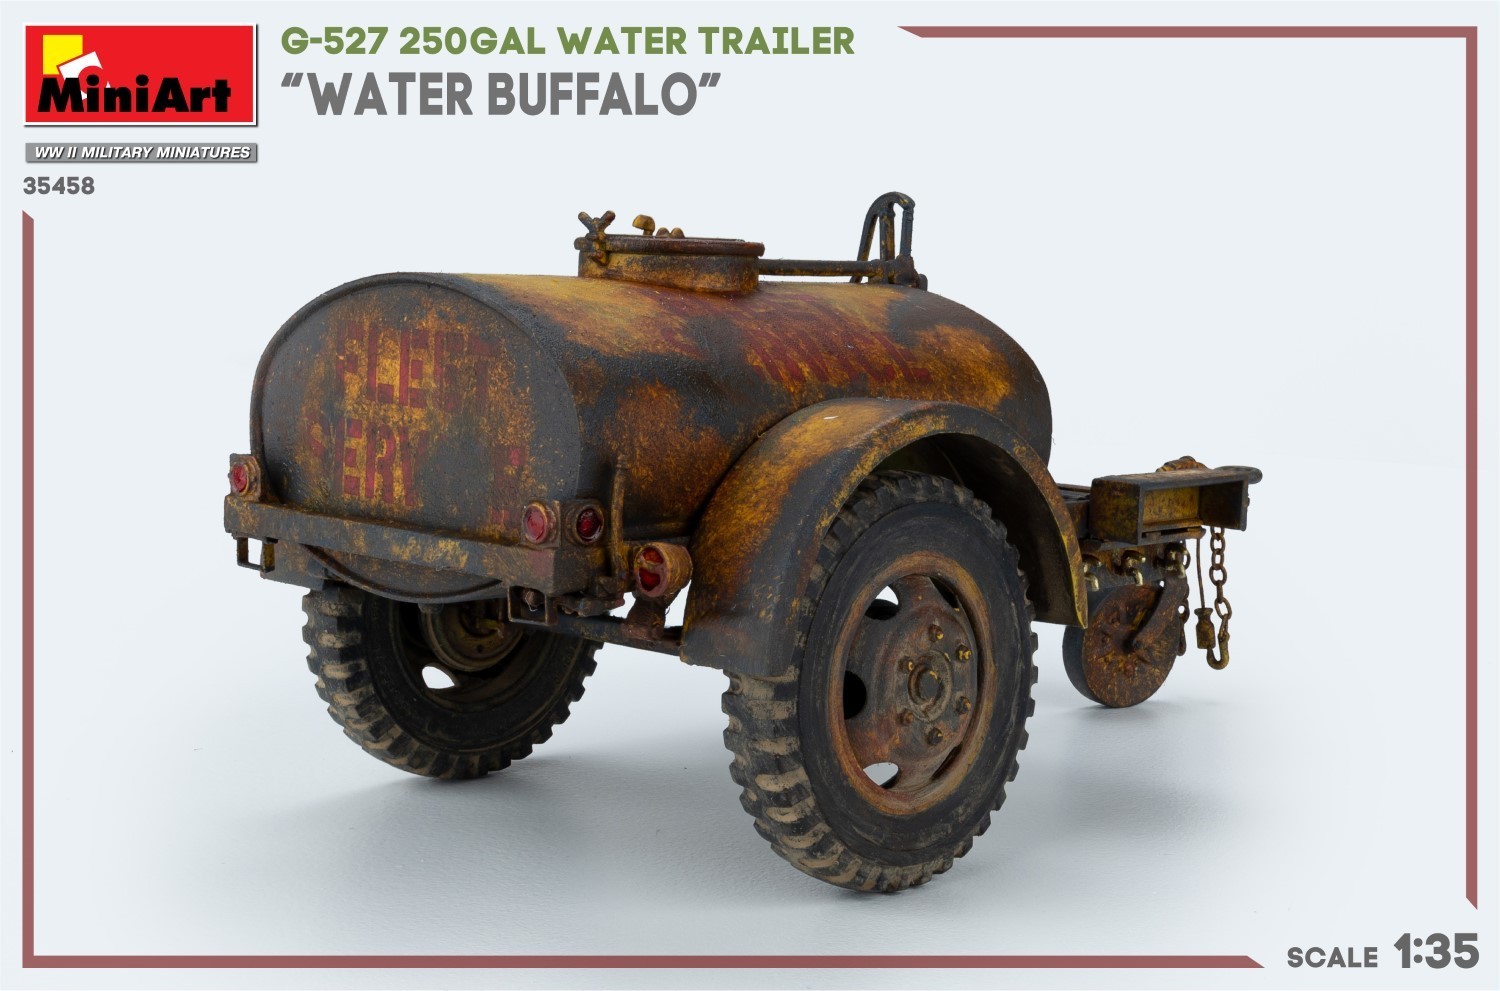 MiniArt G-527 250GAL Water Trailer “Water Buffalo” Rust Paint-3